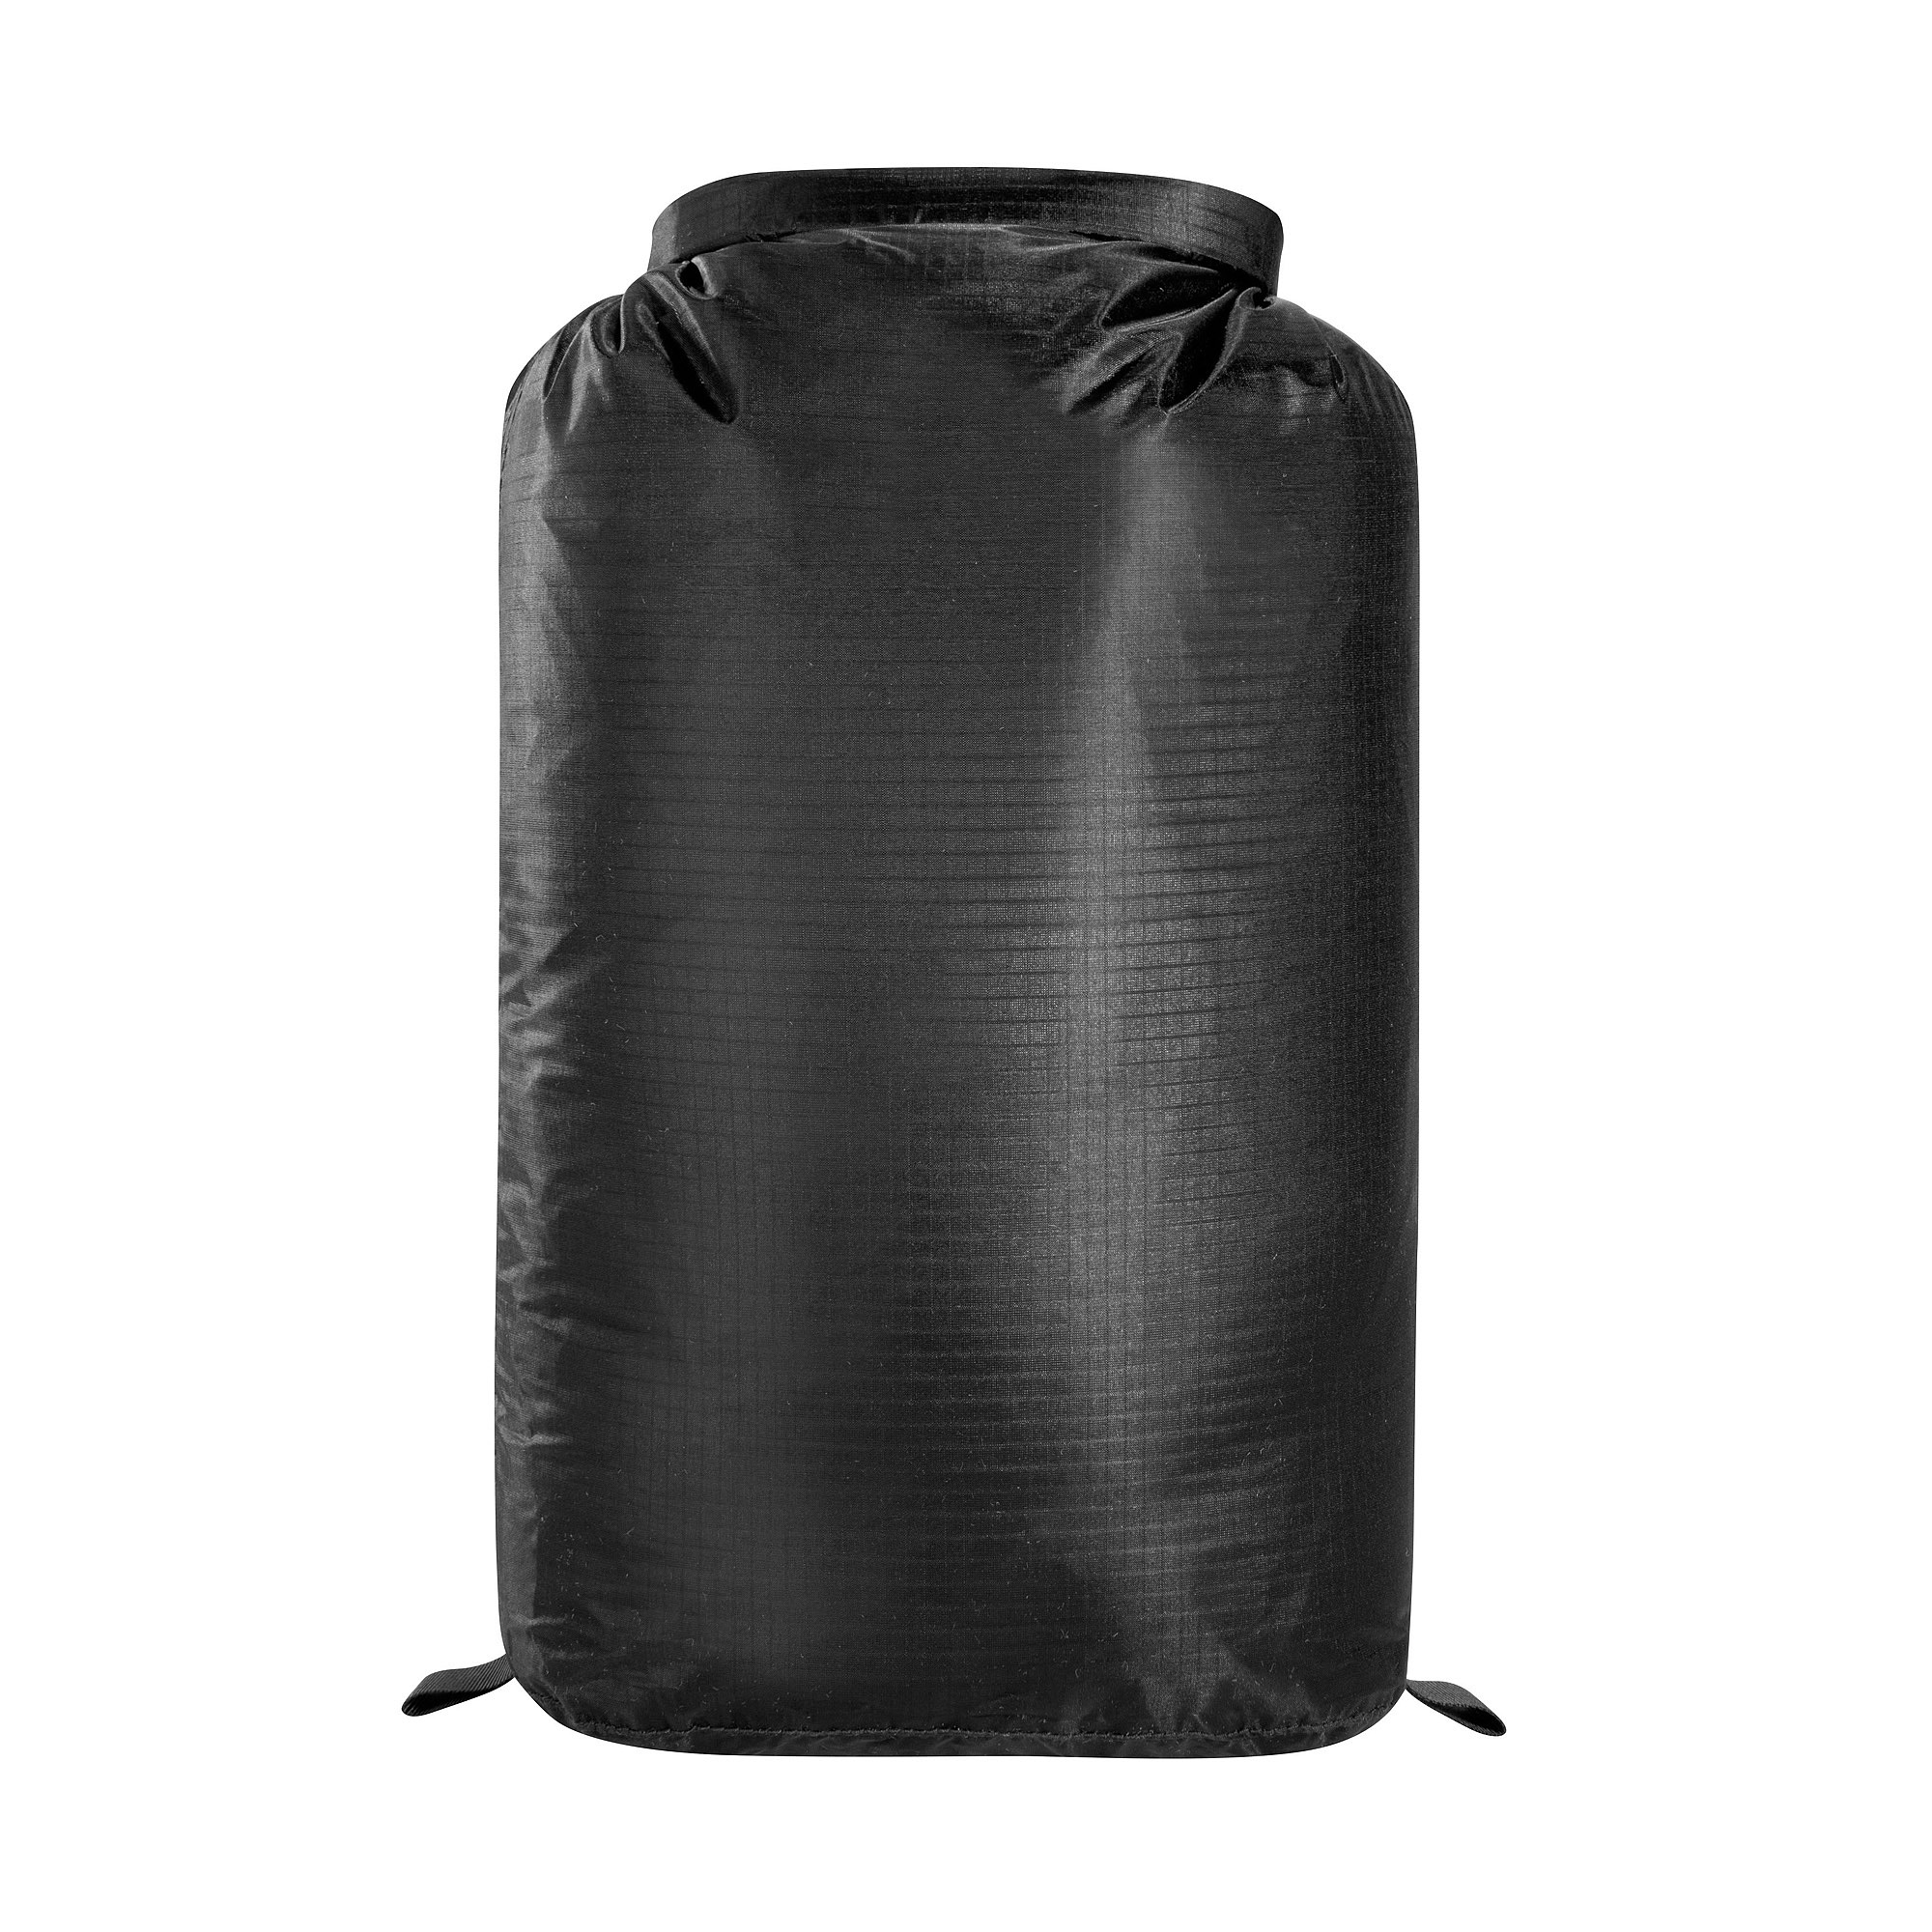 Tasche, Tatonka SQZY Dry Bag 5l black schwarz Reisezubehör 4013236393705